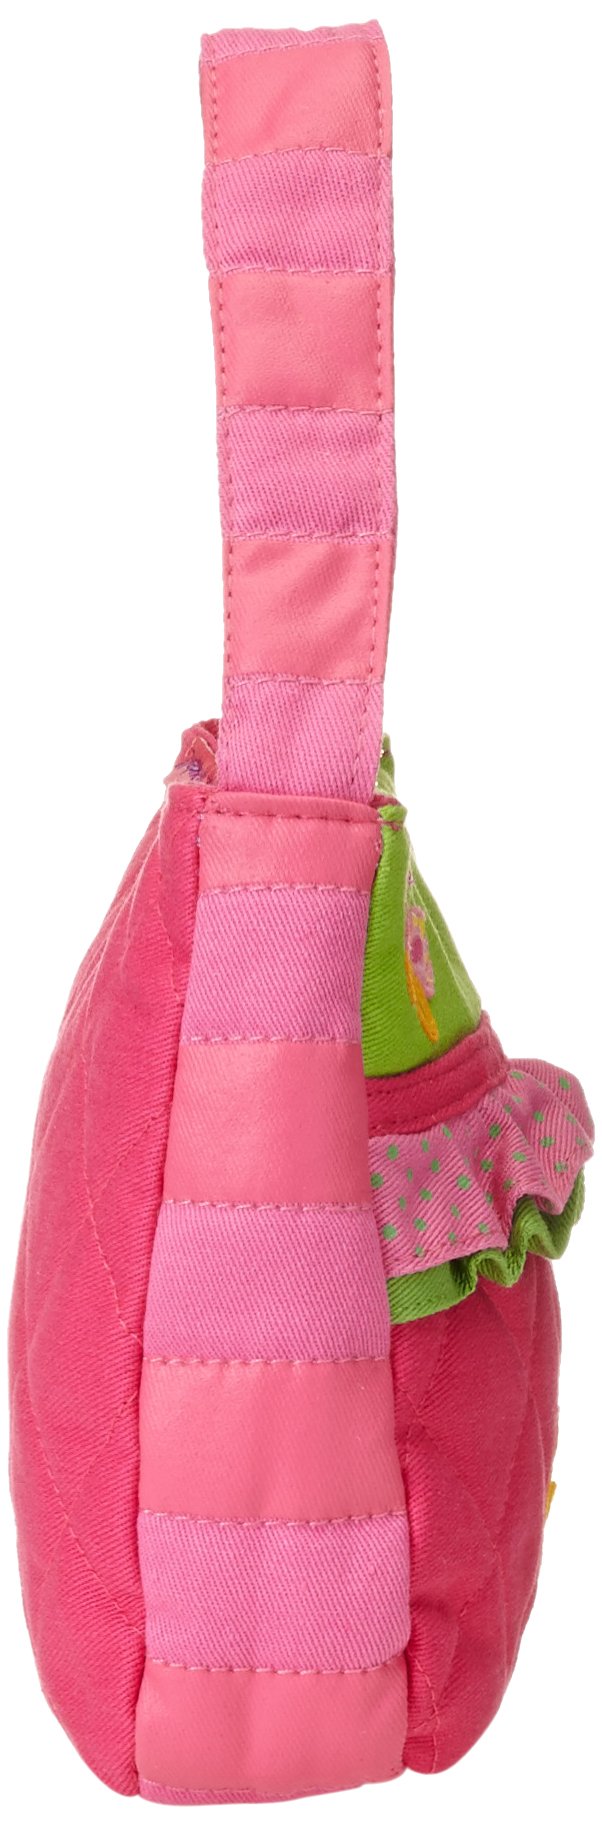 Stephen Joseph Little Girls Toddler Quilted Purse, Purse for Little Girls Handbags Kids Age 3-8